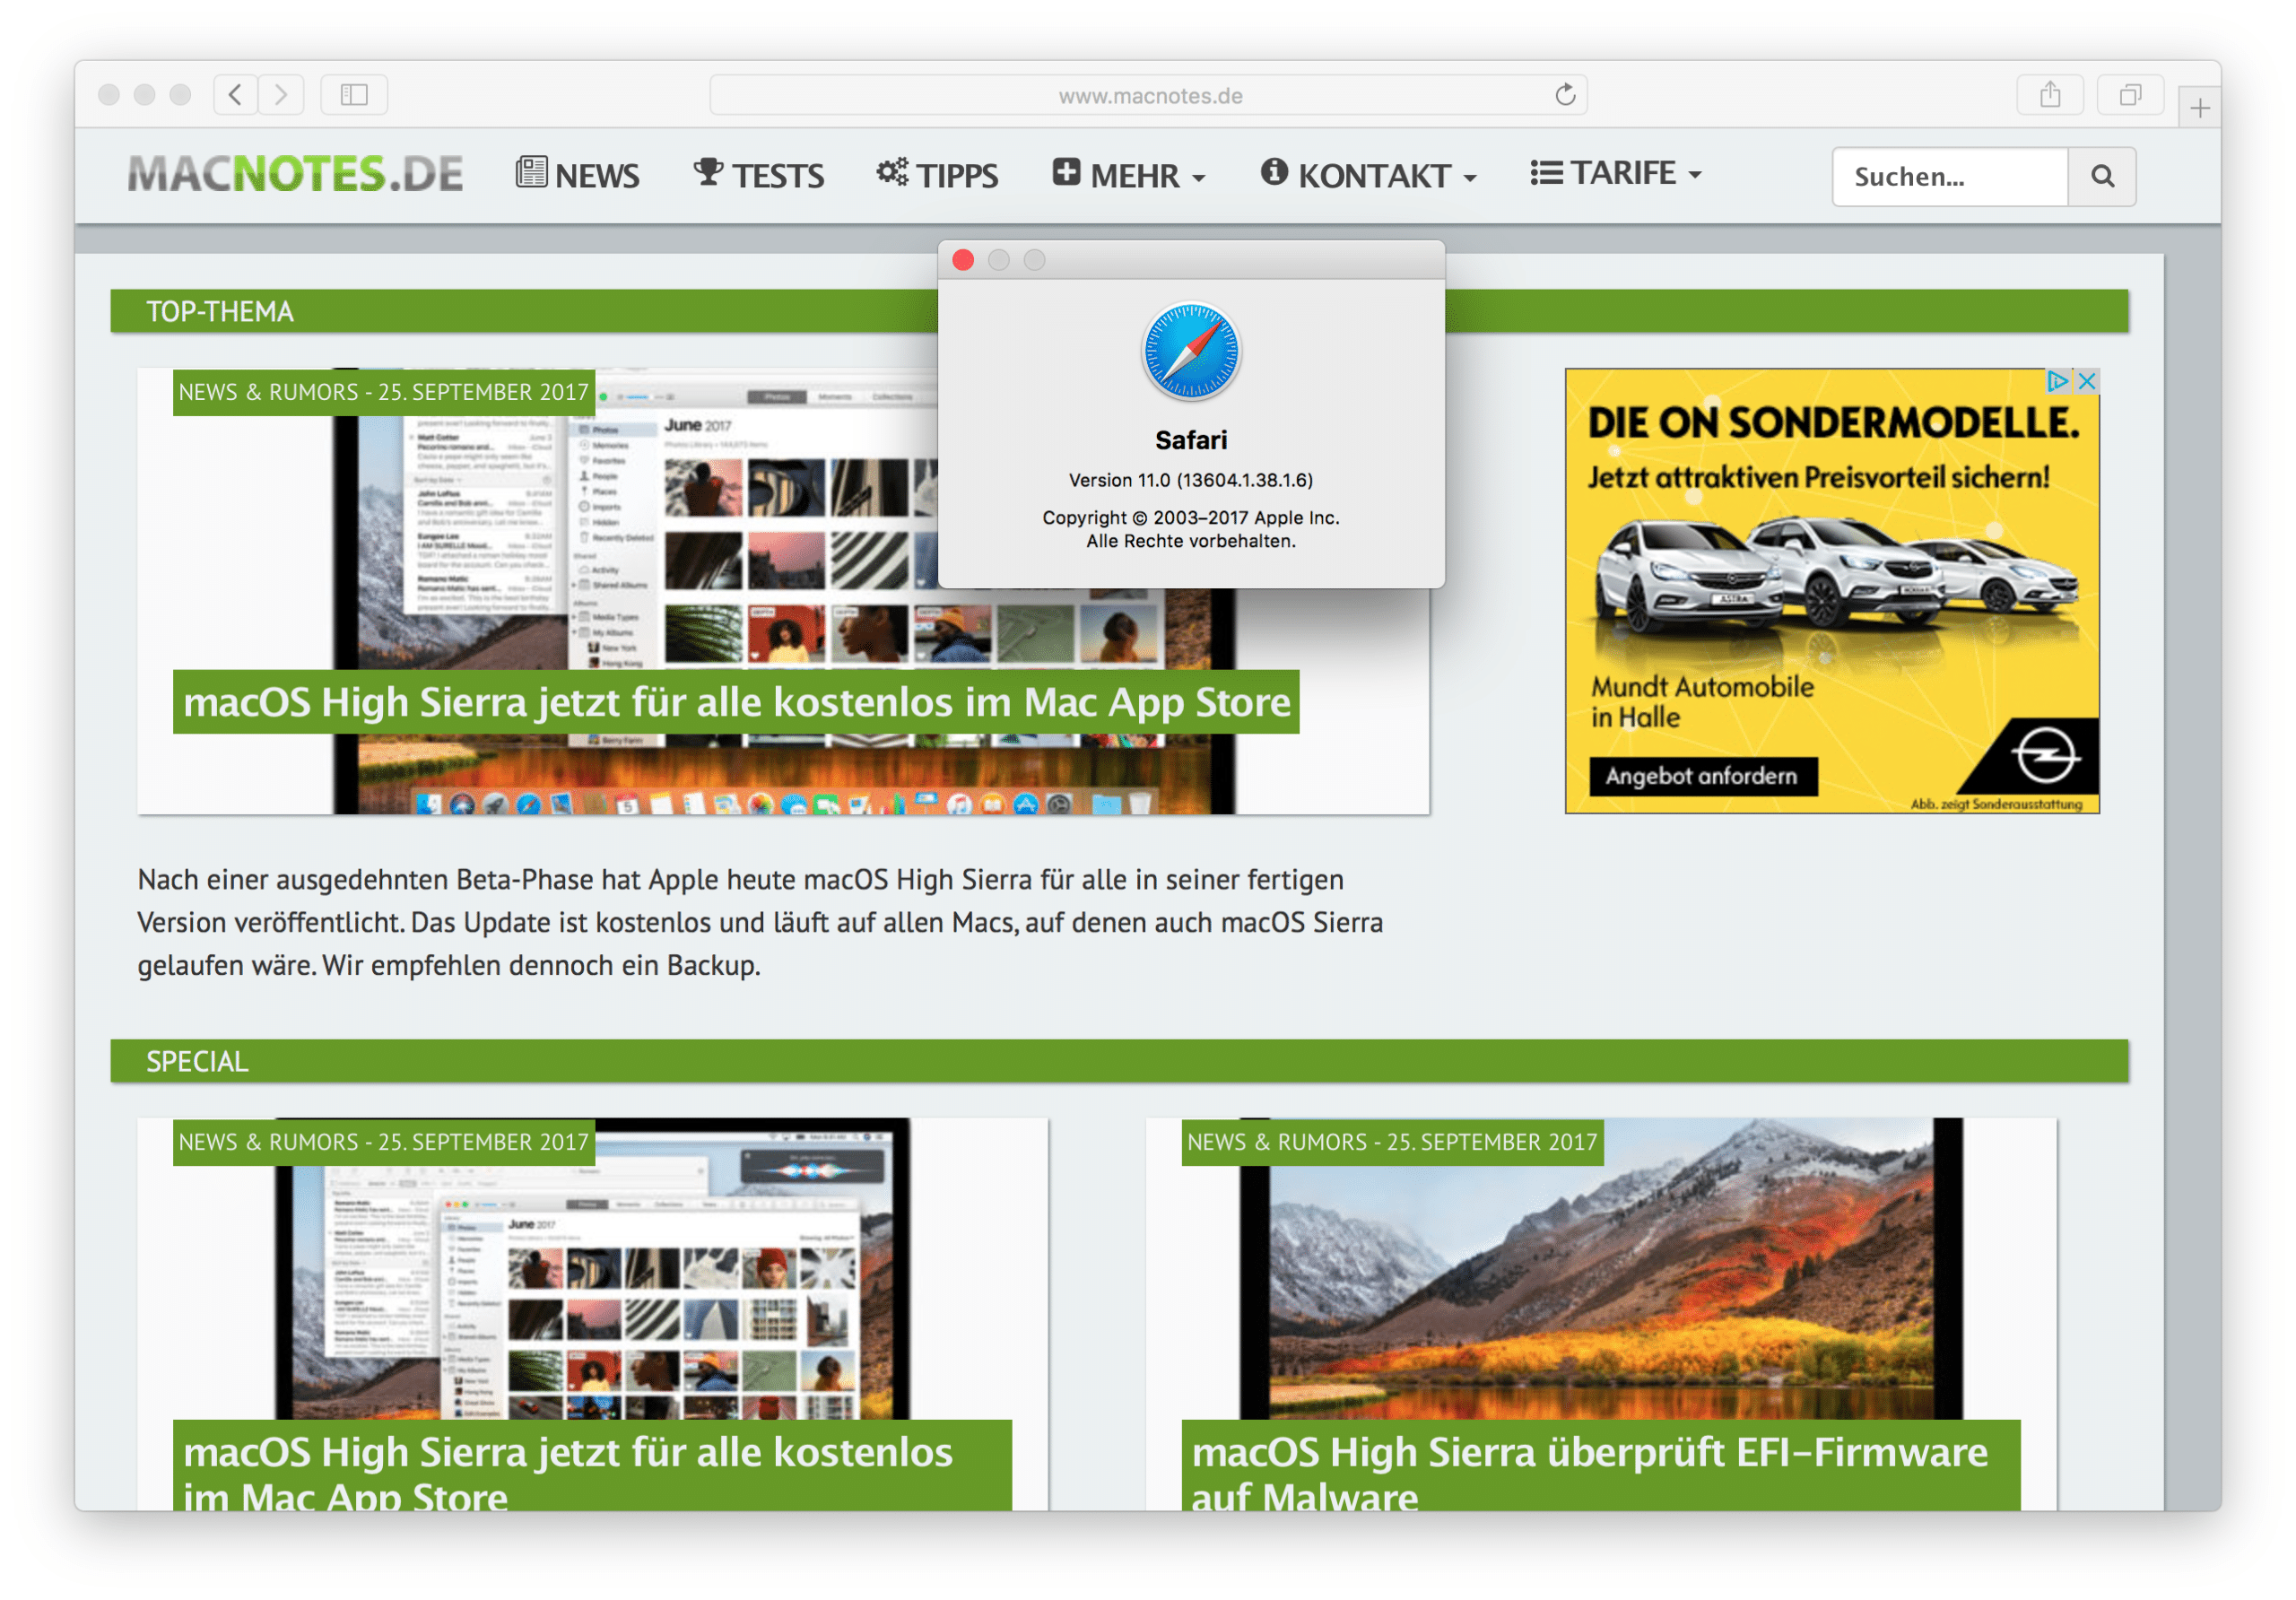 Safari 11 unter macOS High Sierra, Bild: Screenshot